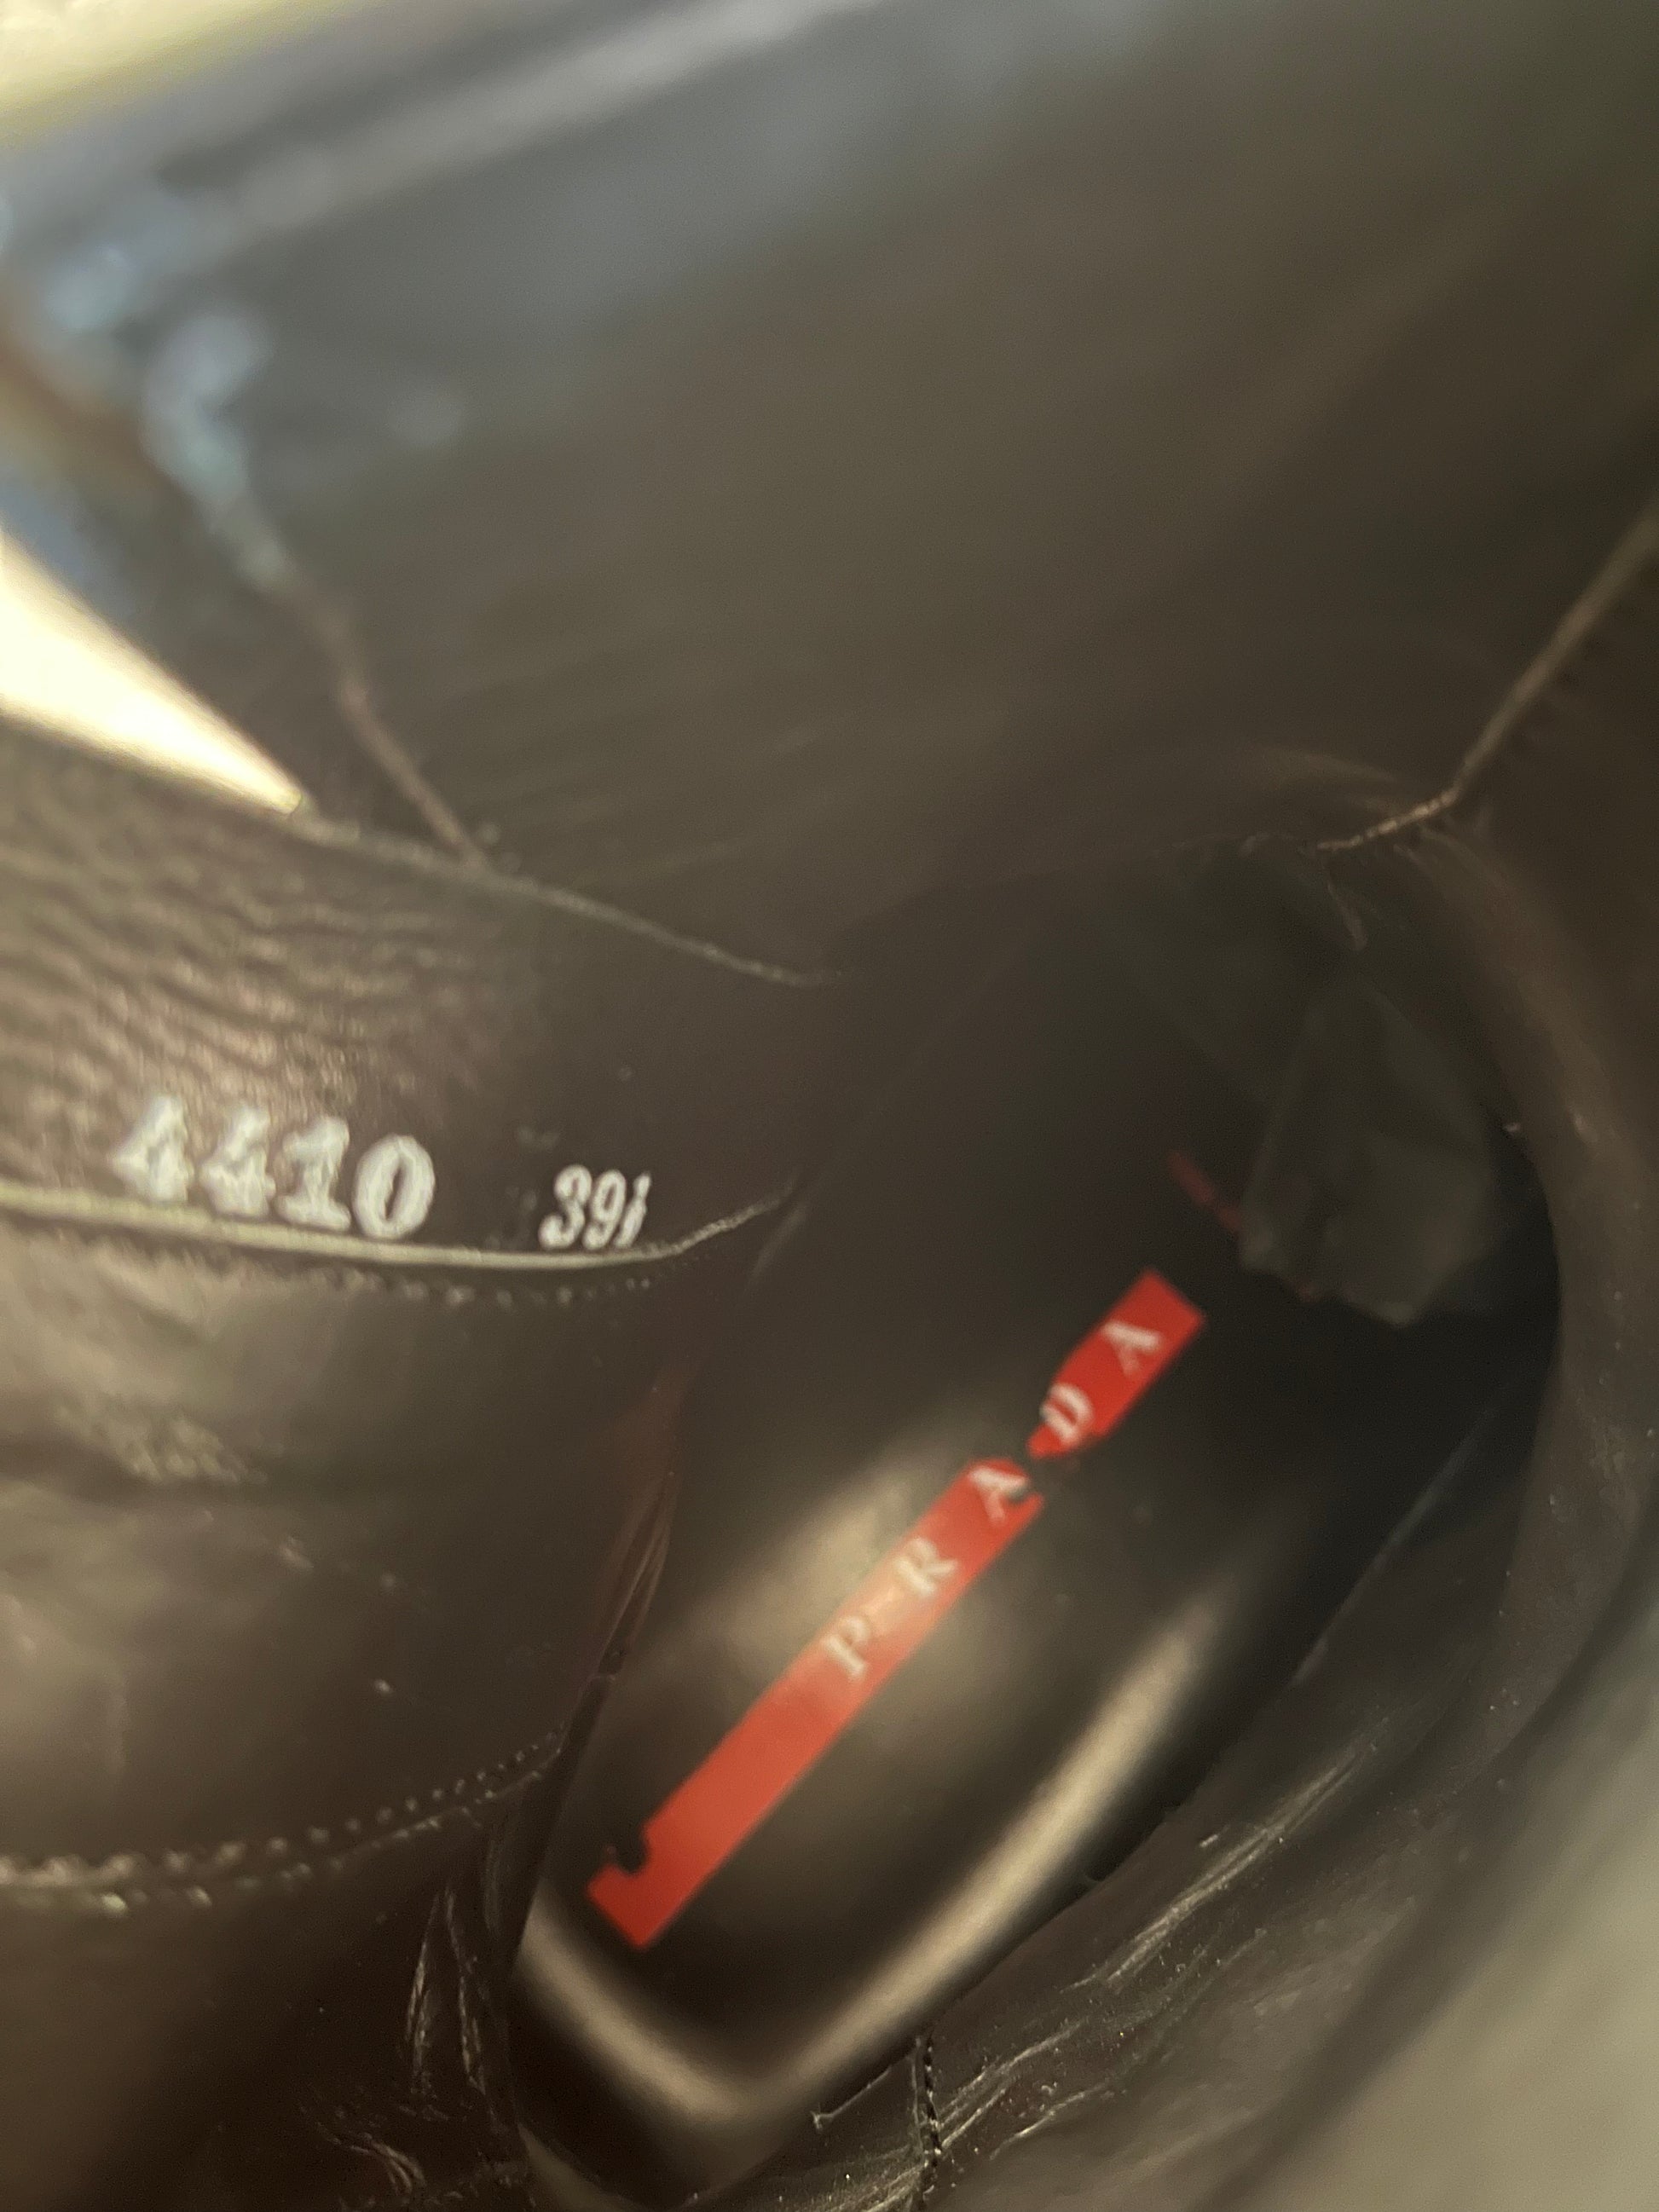 FW1999 Prada Ankle Vibram Leather Boots (40.5eu/us7.5) (40.5) - 10